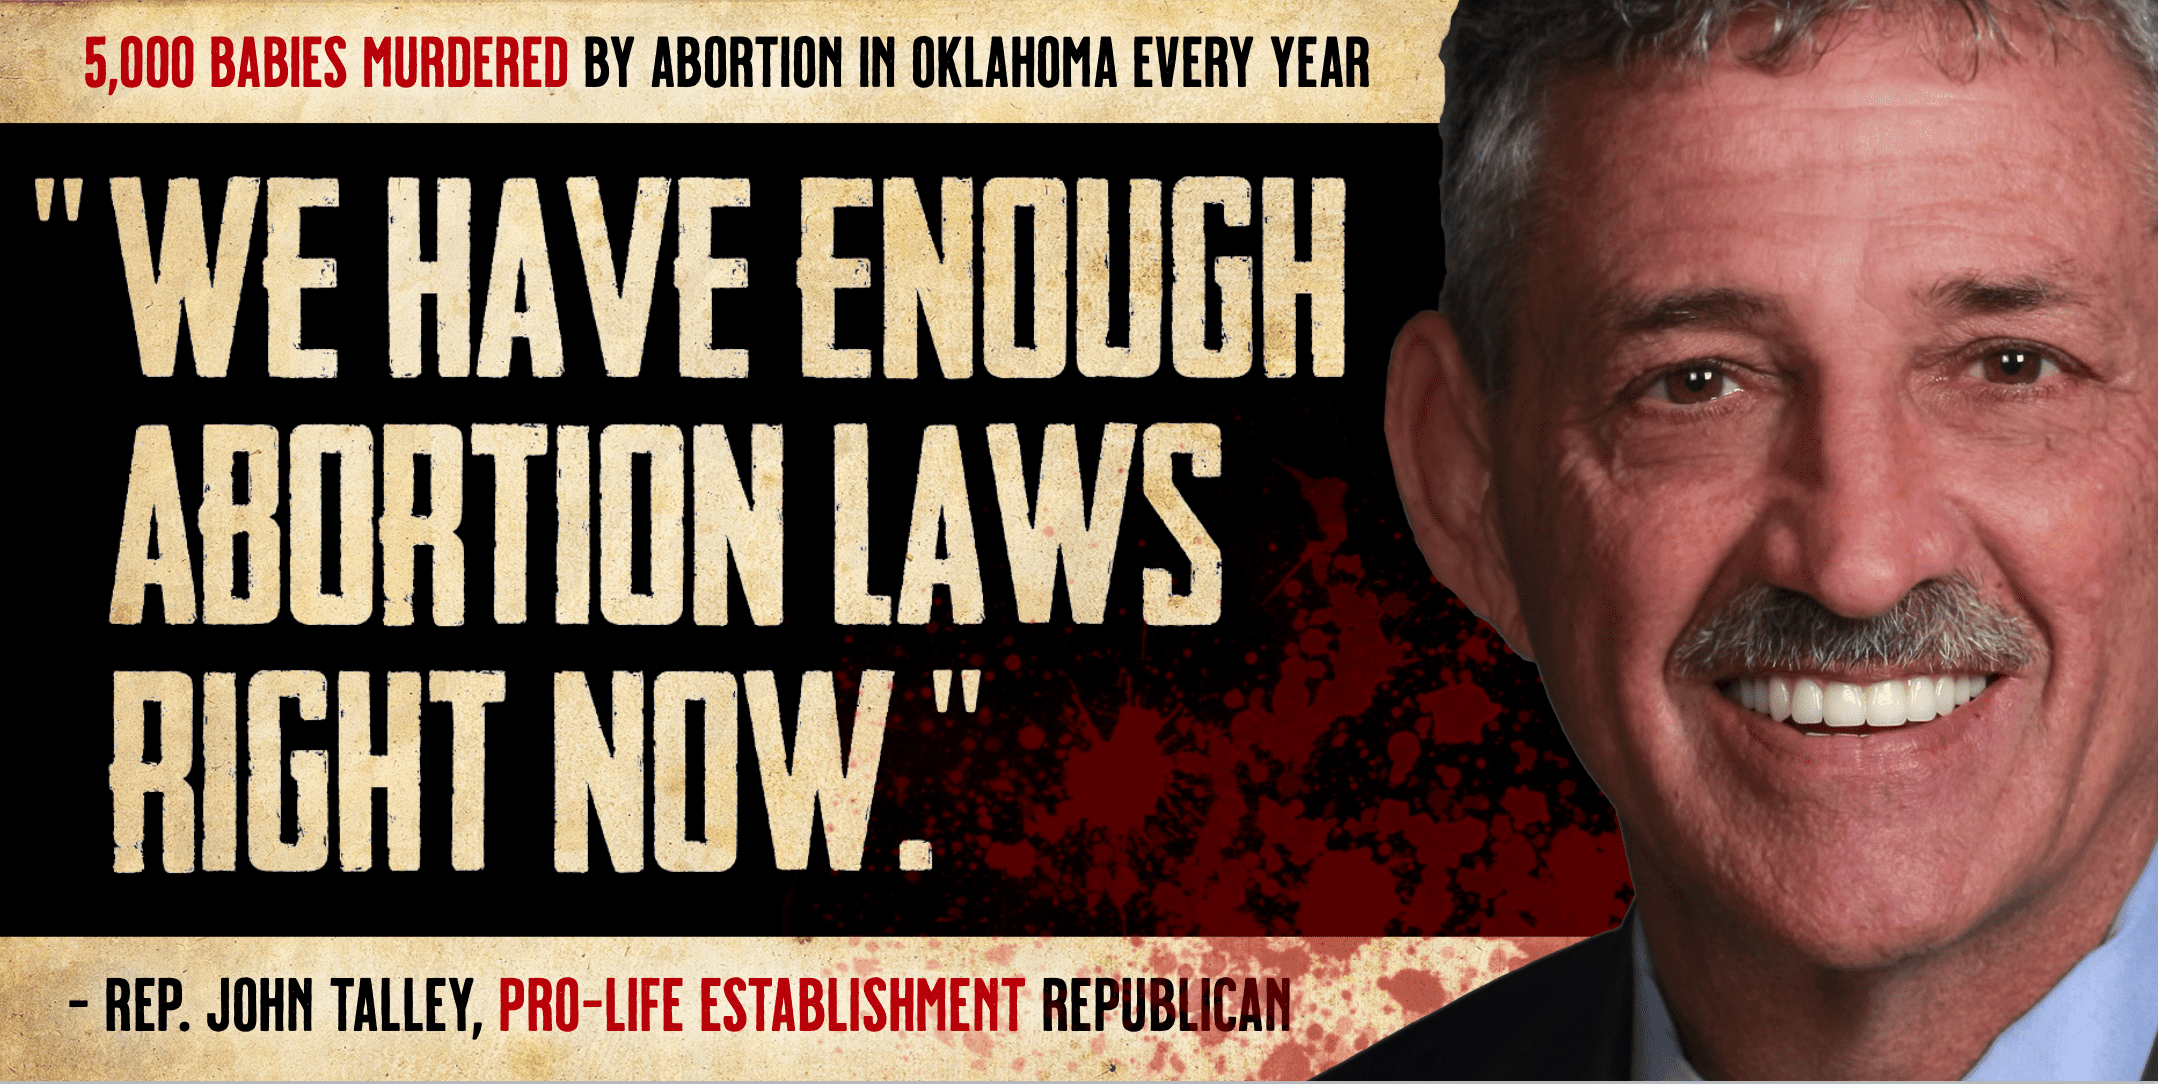 Rep. John Talley (R): Keep abortion legal because 